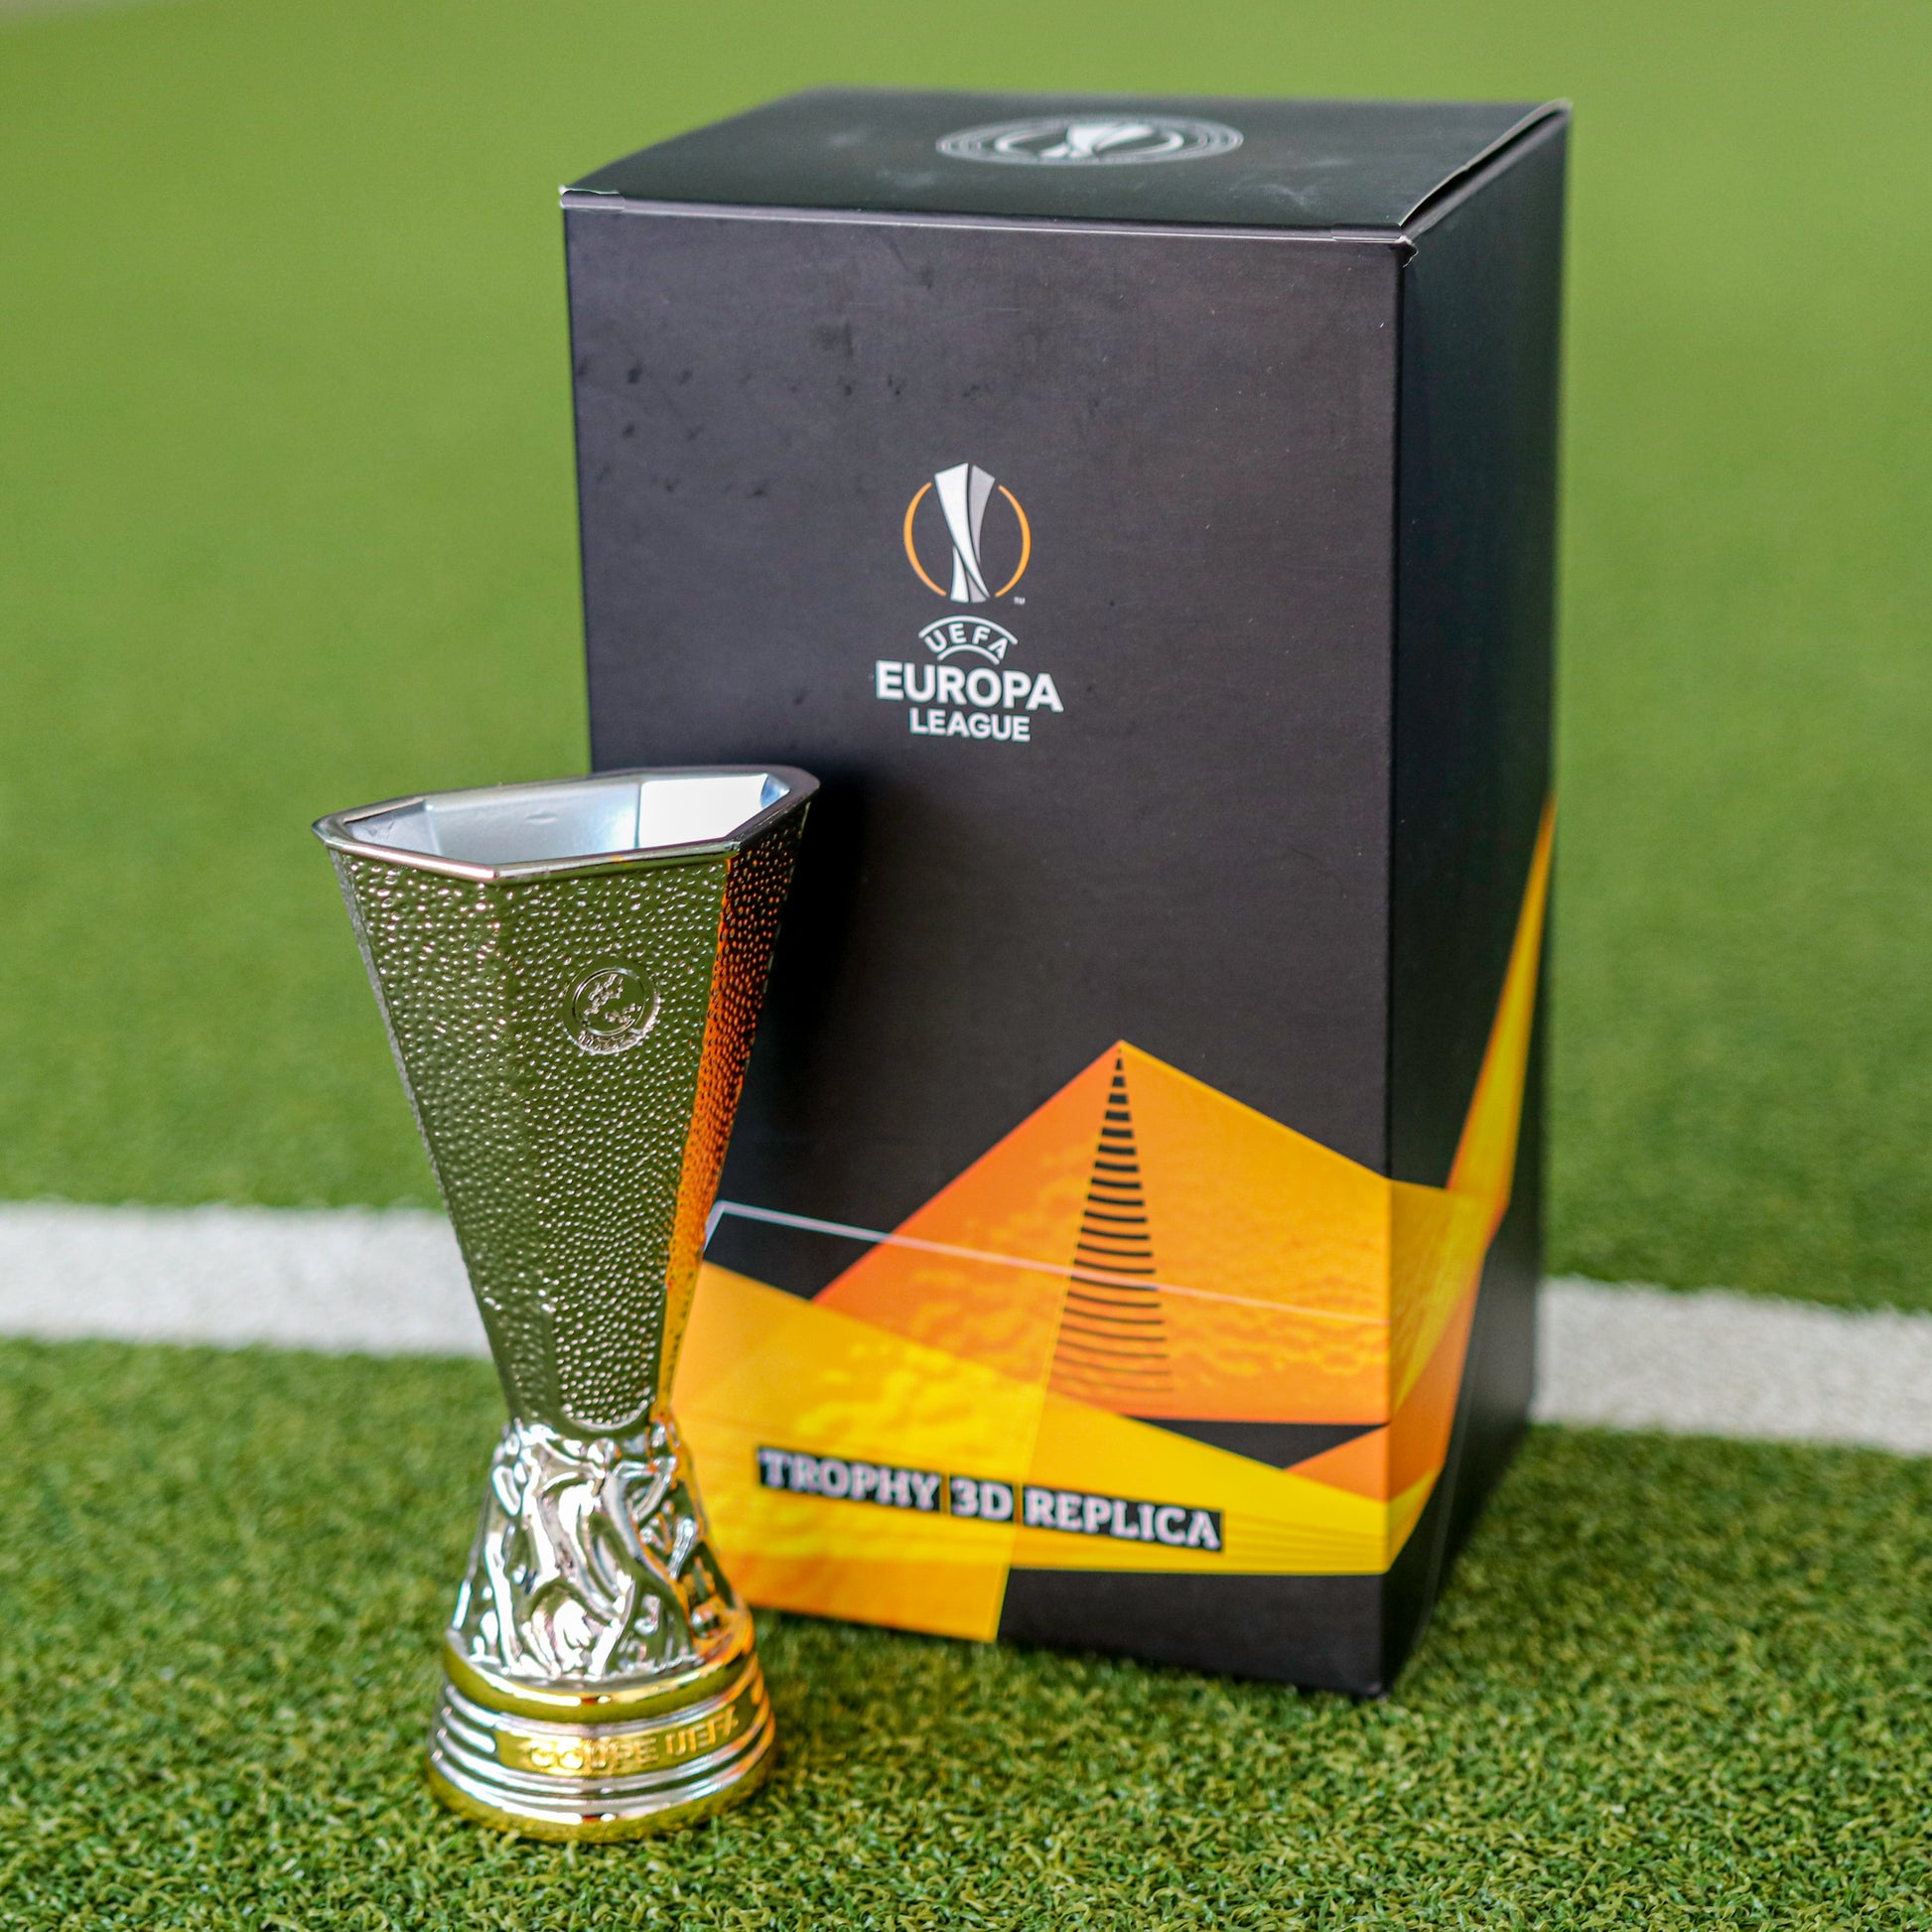 UEFA Europa League 150mm Replica Trophy – National Football Museum